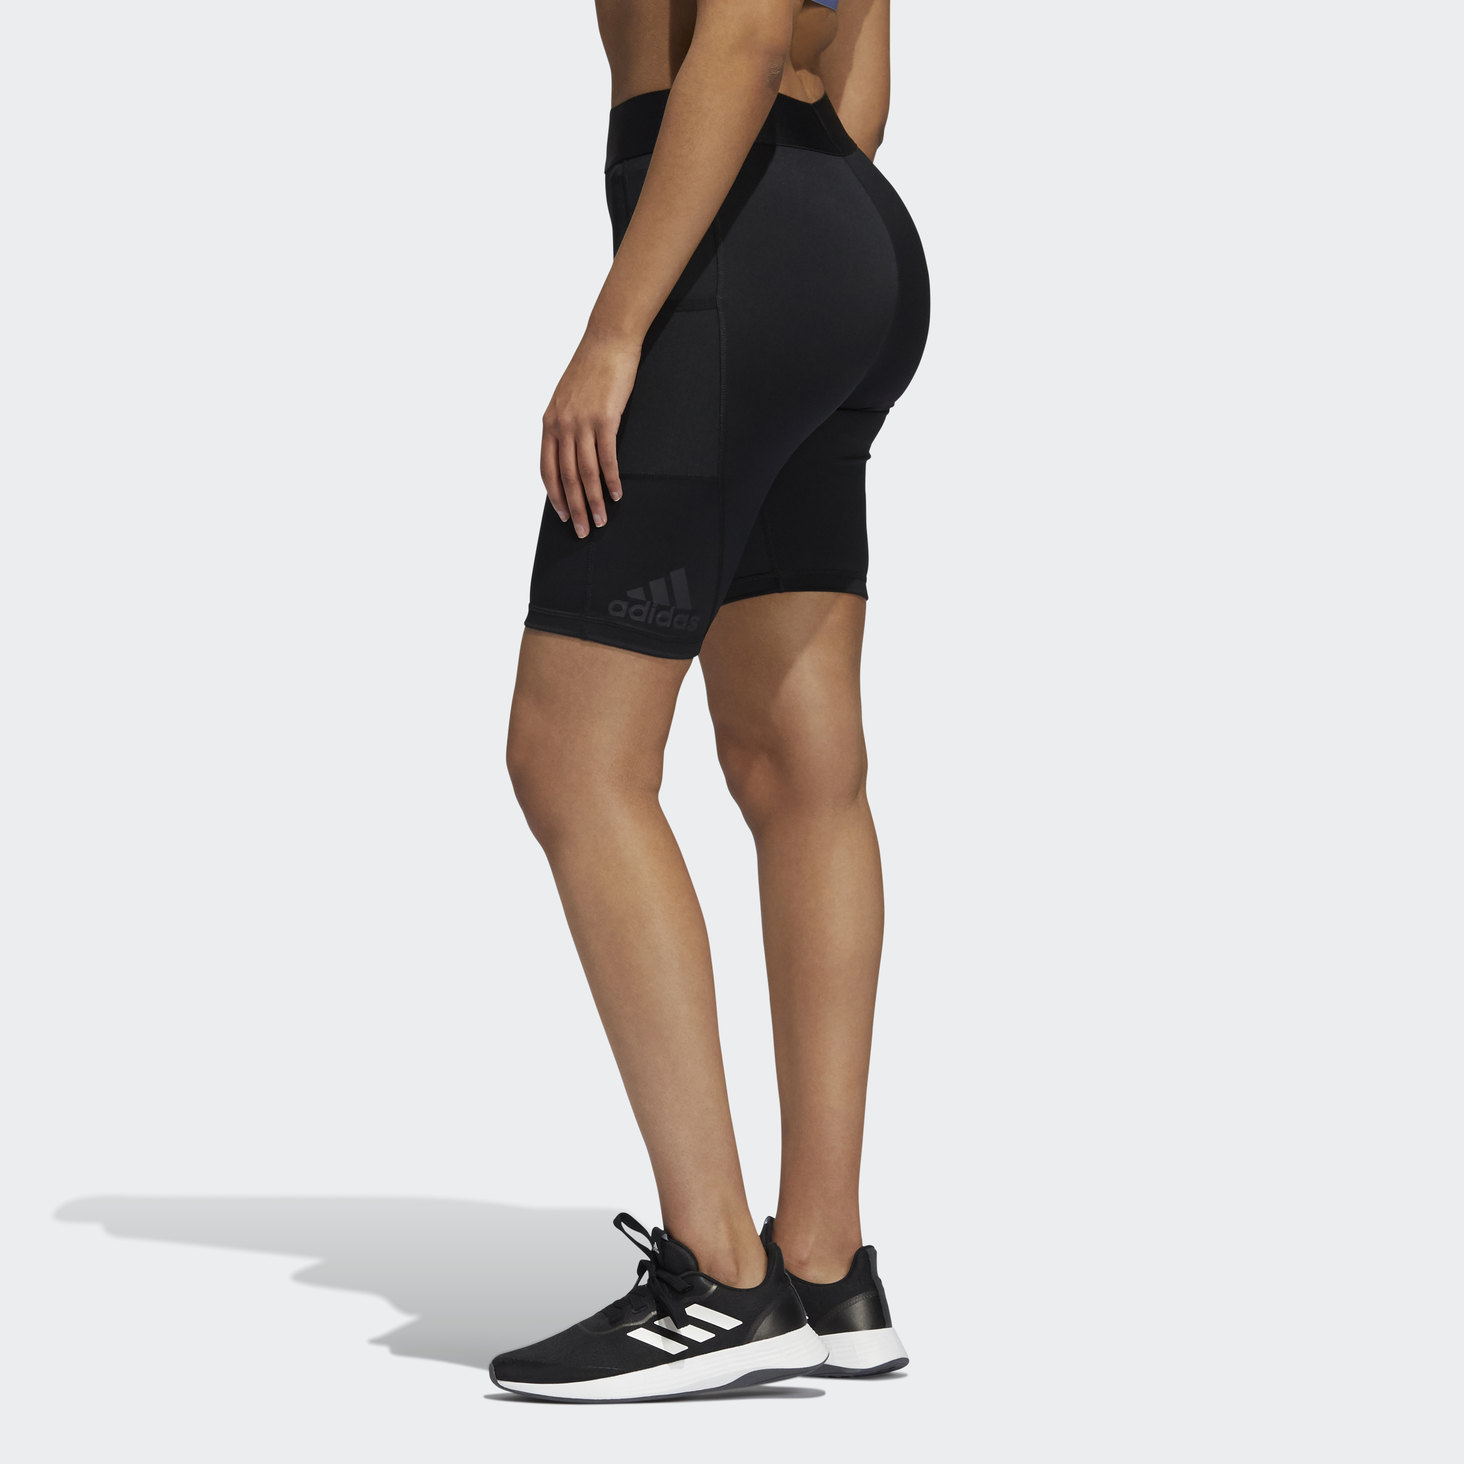 adidas Techfit Period Proof 7/8 Leggings - Black